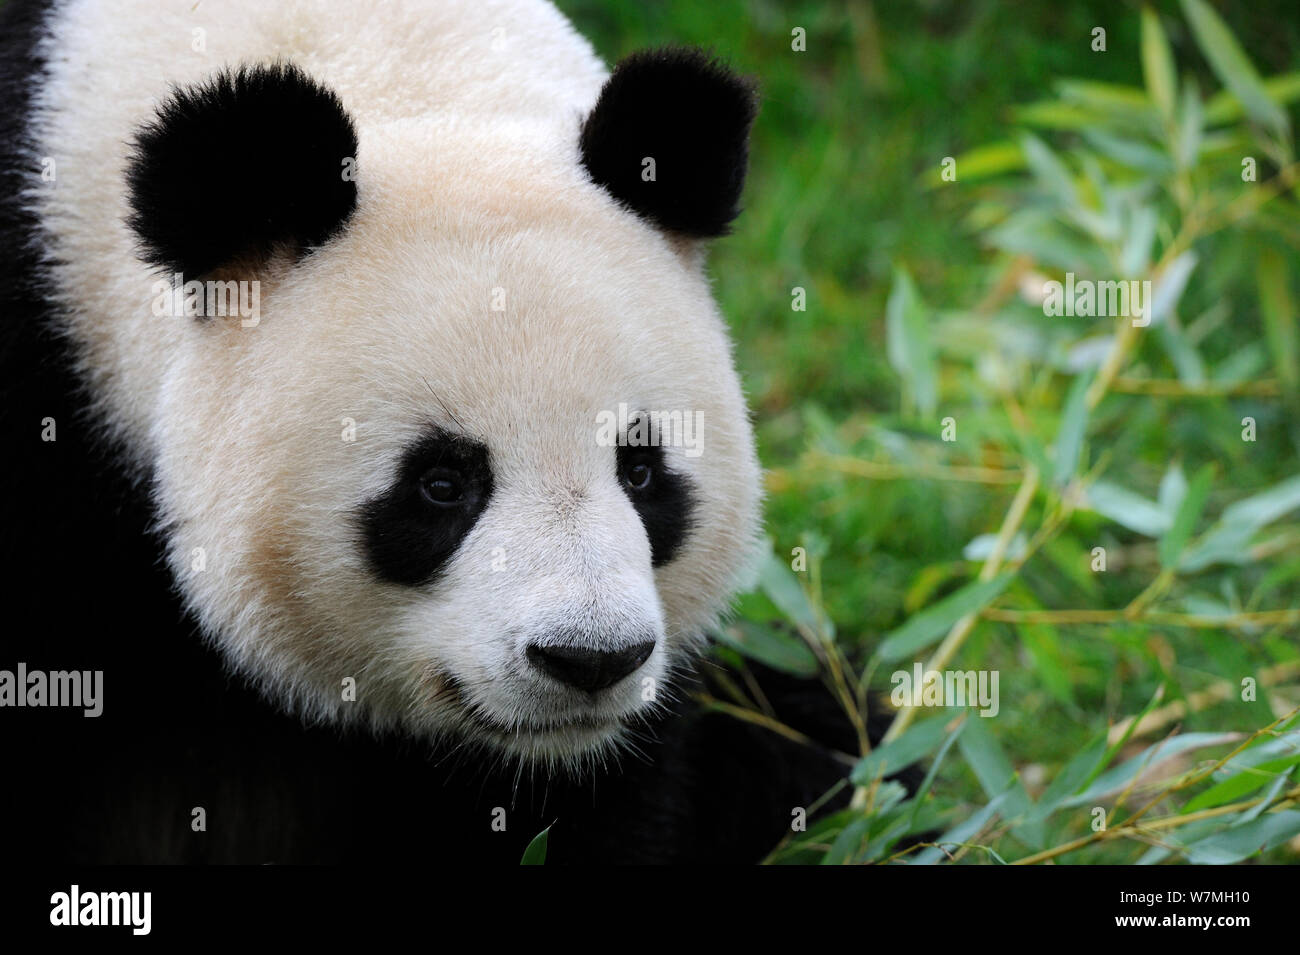 Giant panda (Ailuropoda melanoleuca) portrait, captive, Zoo Parc de Beauval, France, Endangered Stock Photo